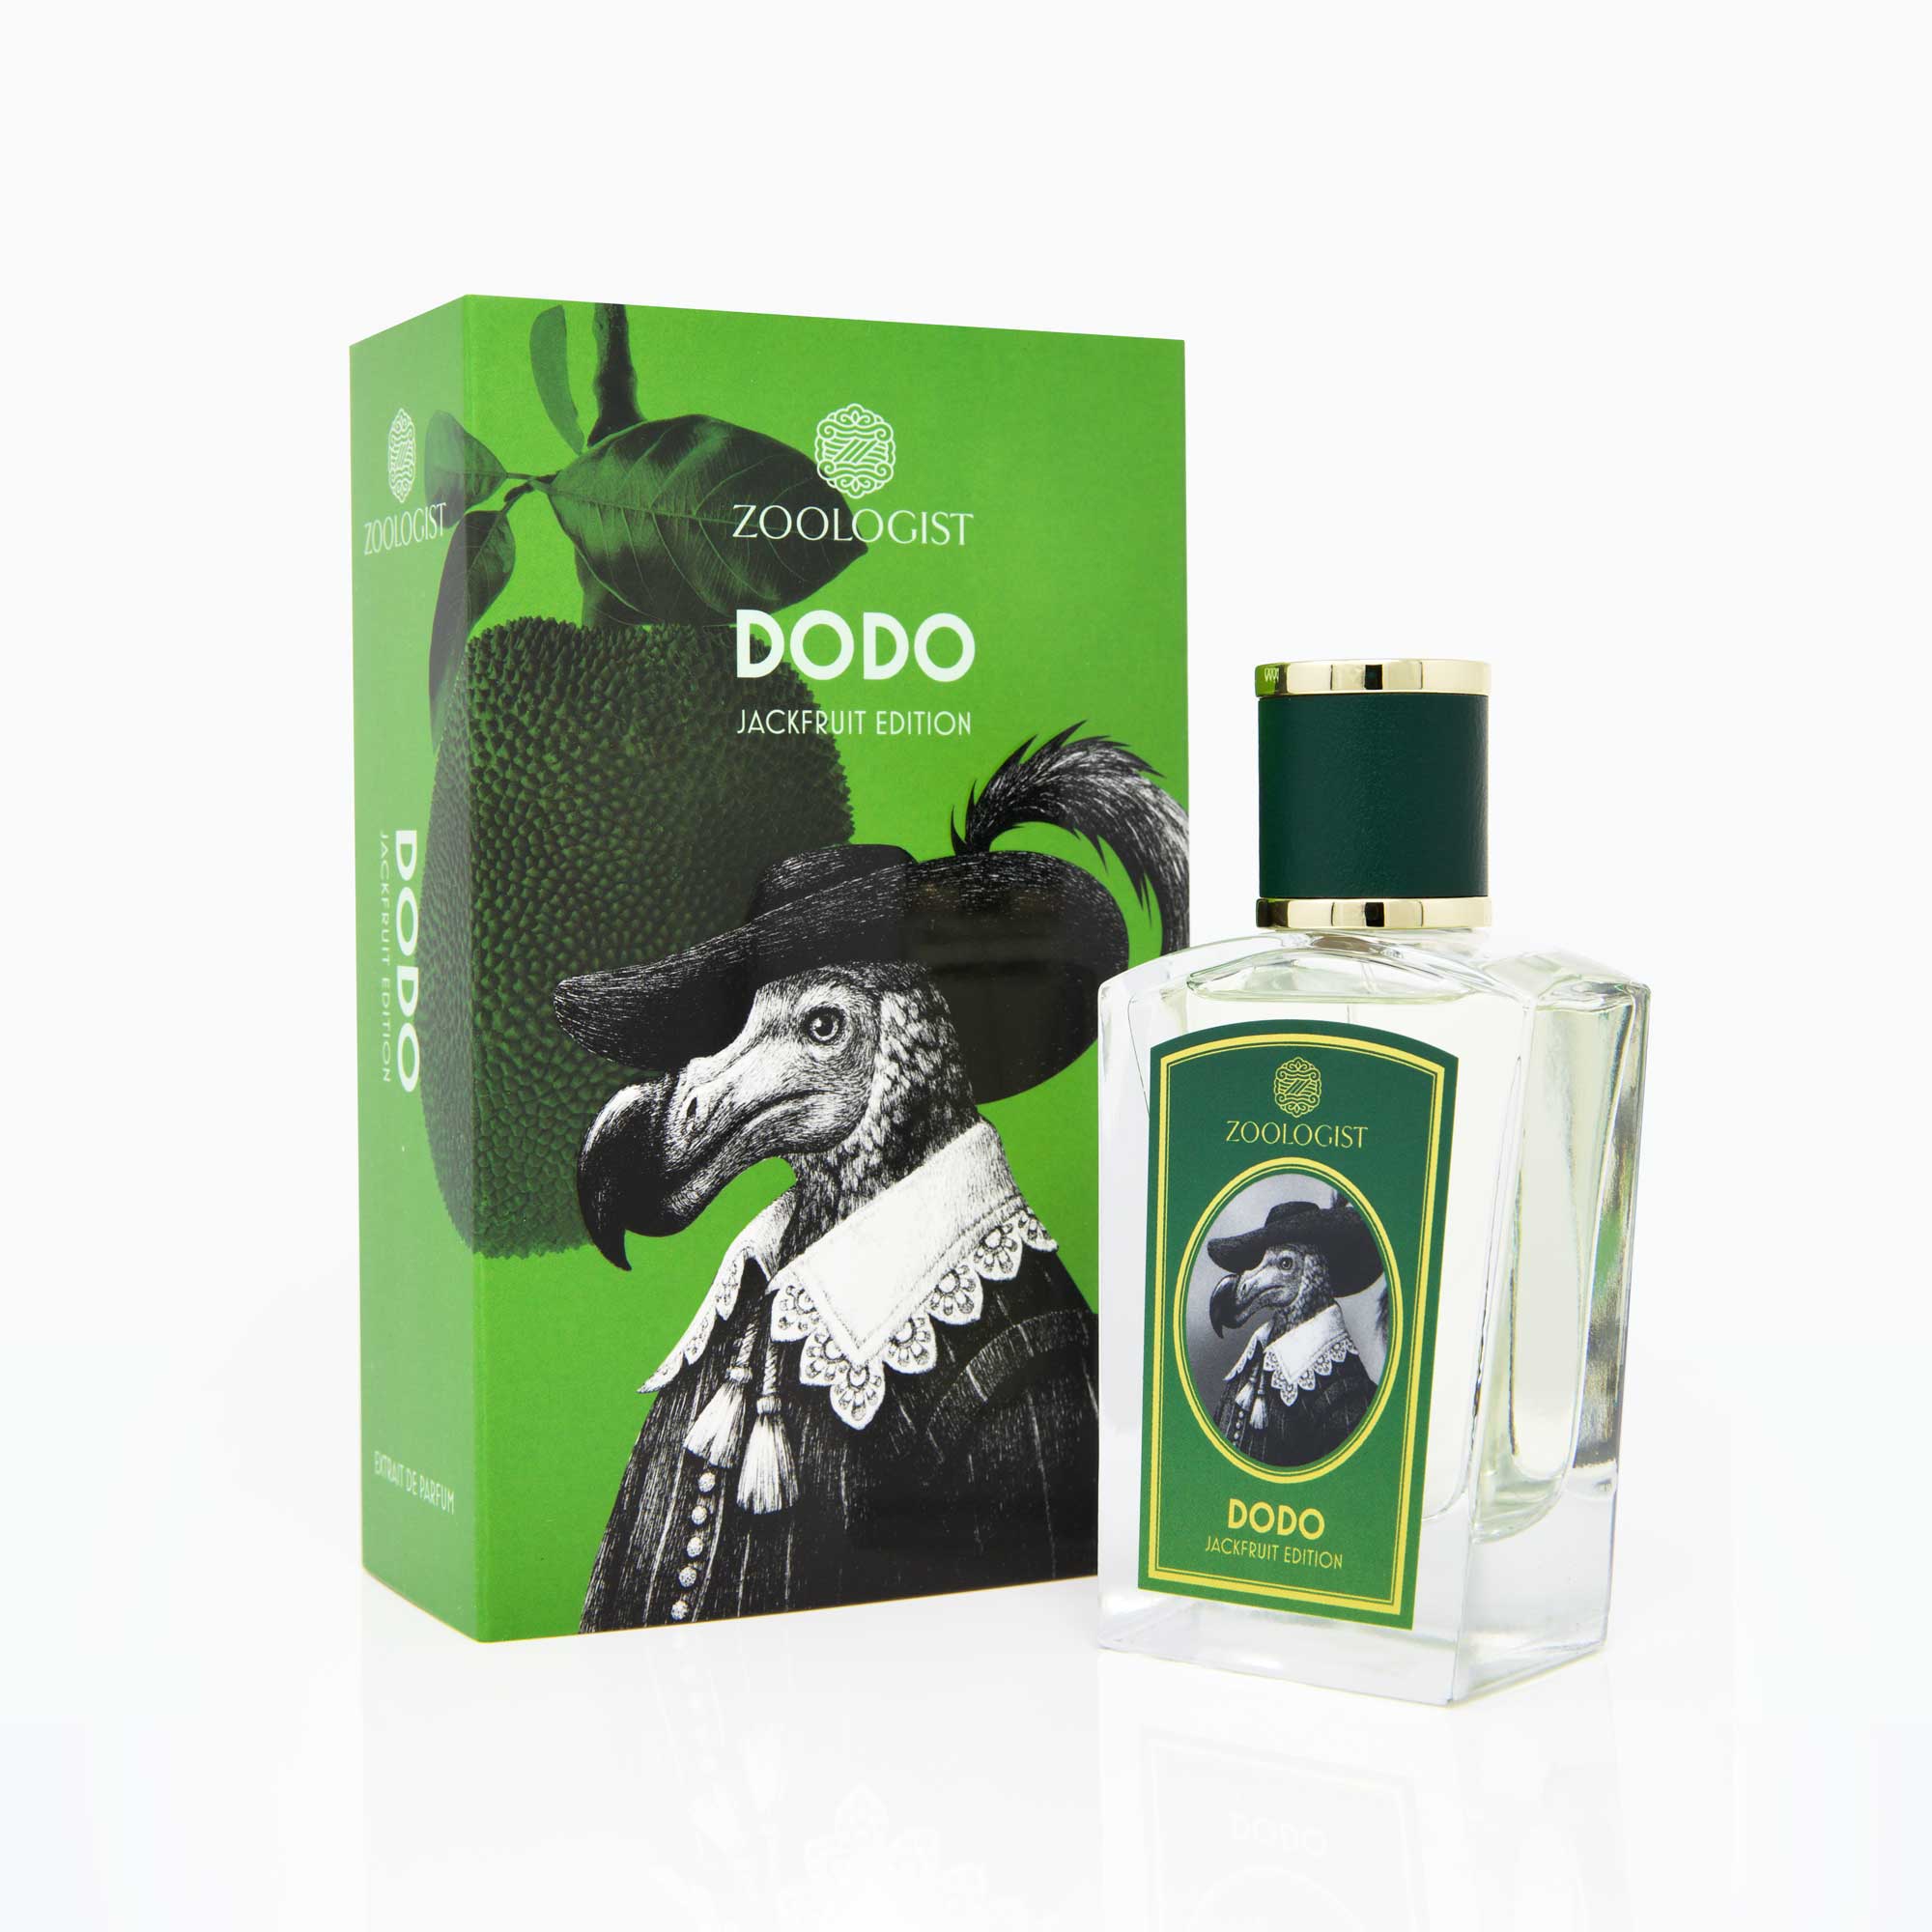 Zoologist Dodo Jackfruit Edition Deluxe Bottle